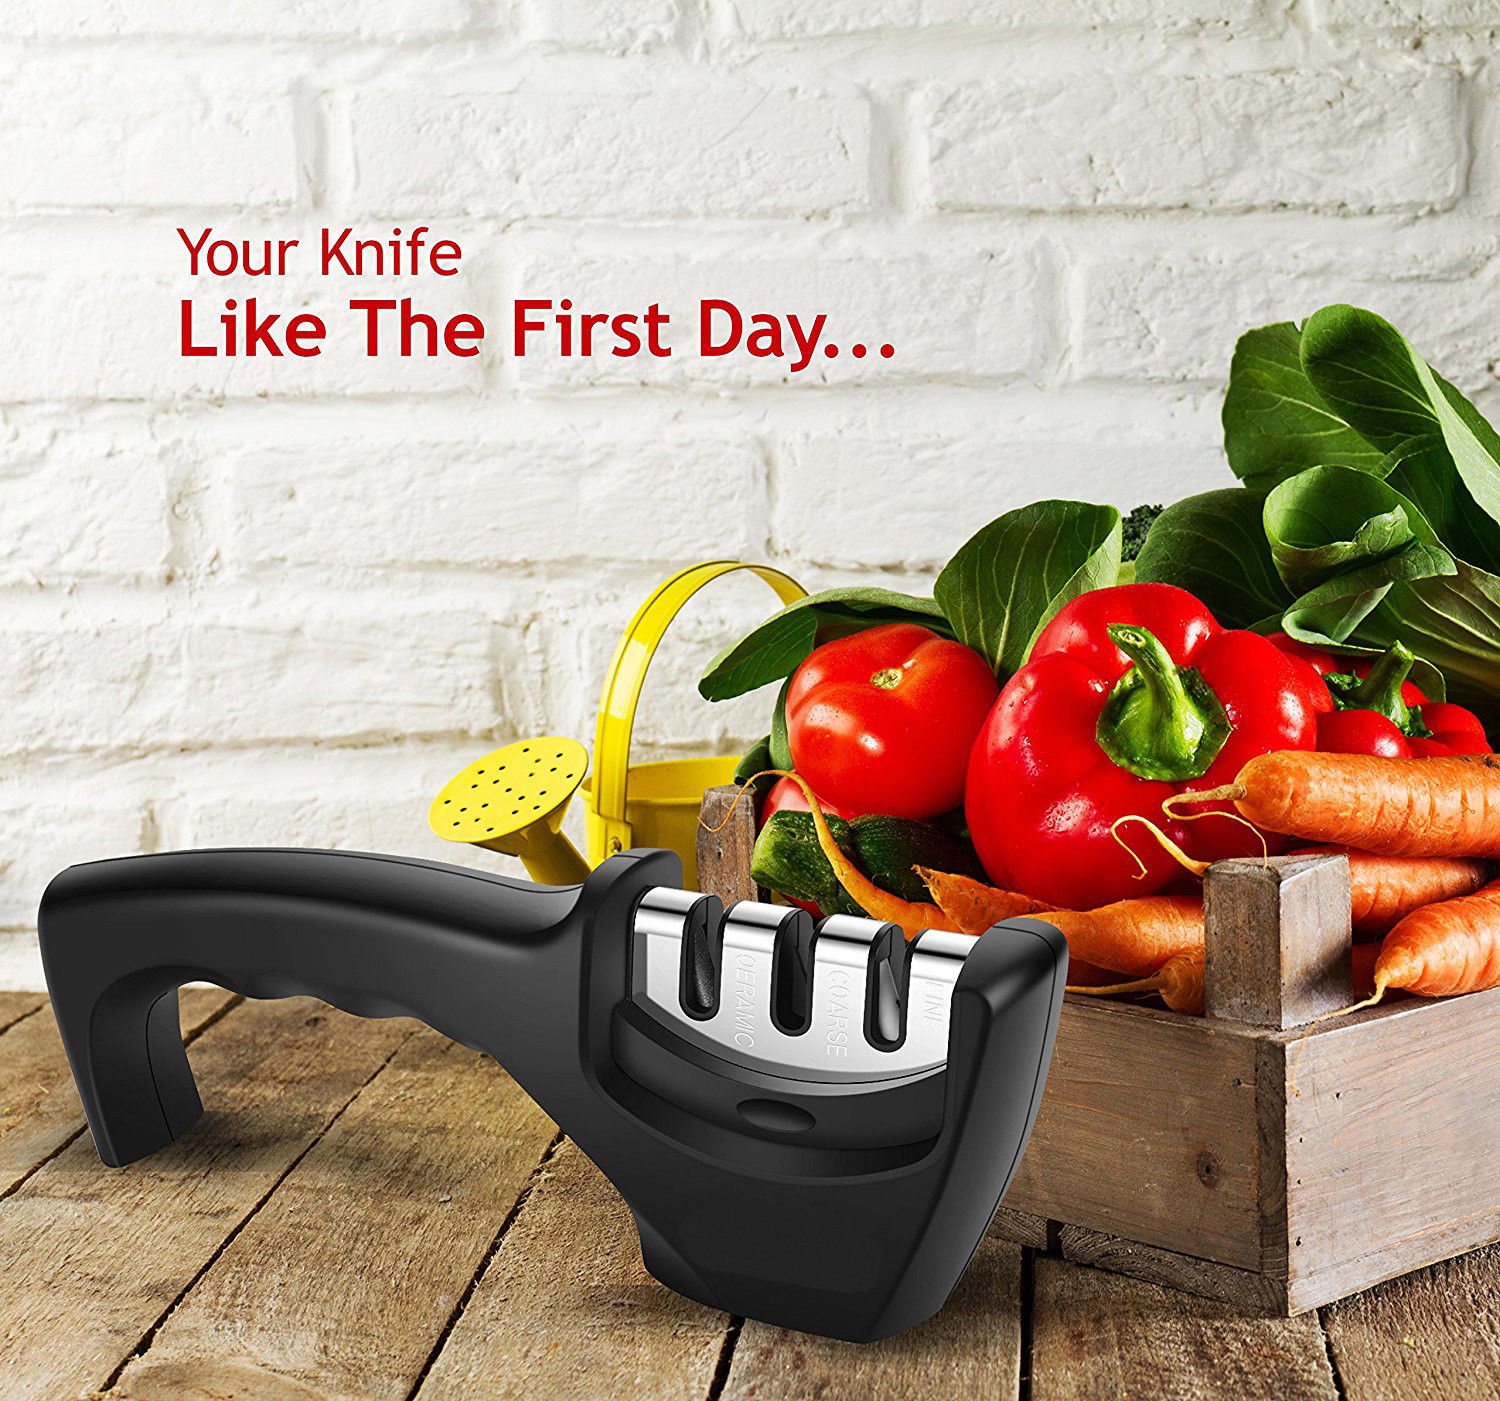 4-in-1 Kitchen Knife Accessories: 3-Stage Knife Sharpener Helps Repair,  Restore.